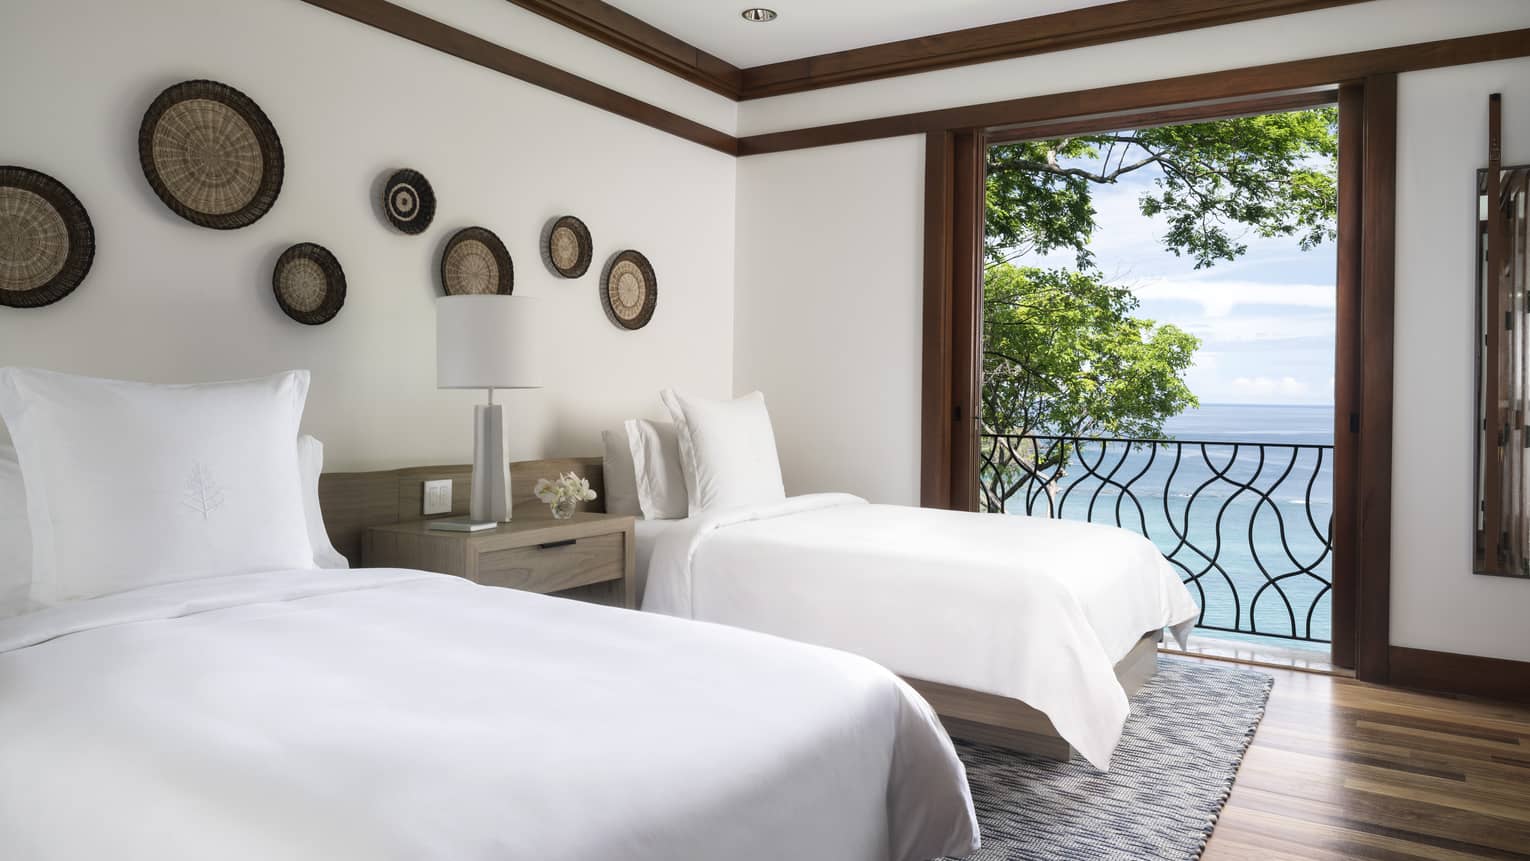 Twin beds with white linens beside open door to iron terrace, ocean views 